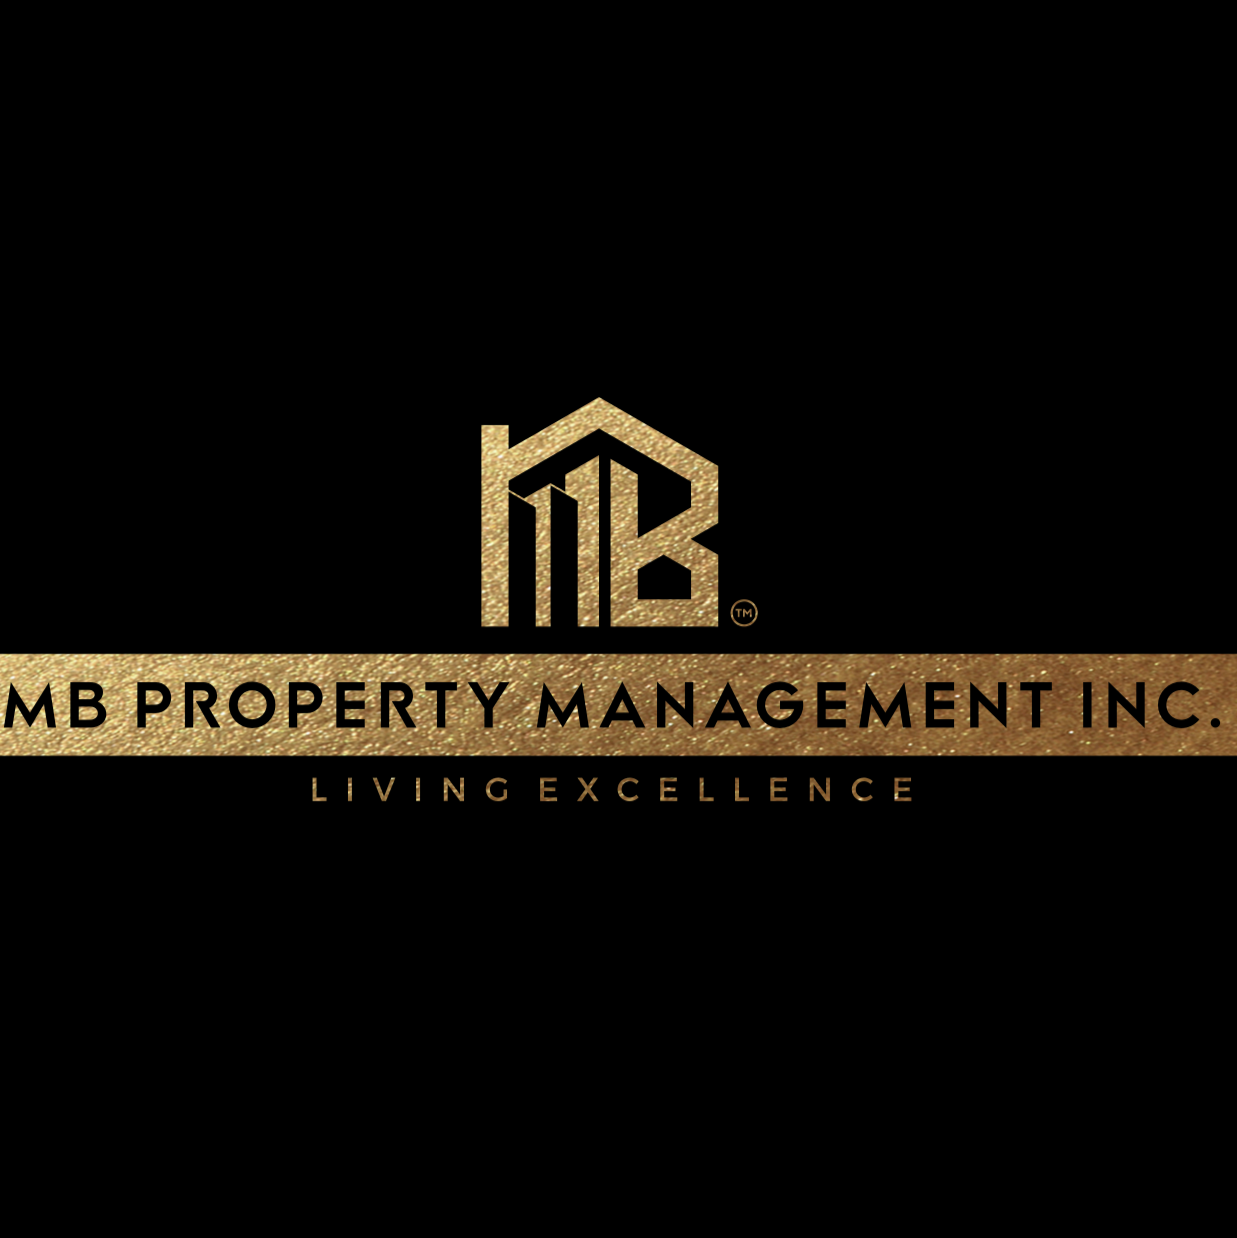 MB Property